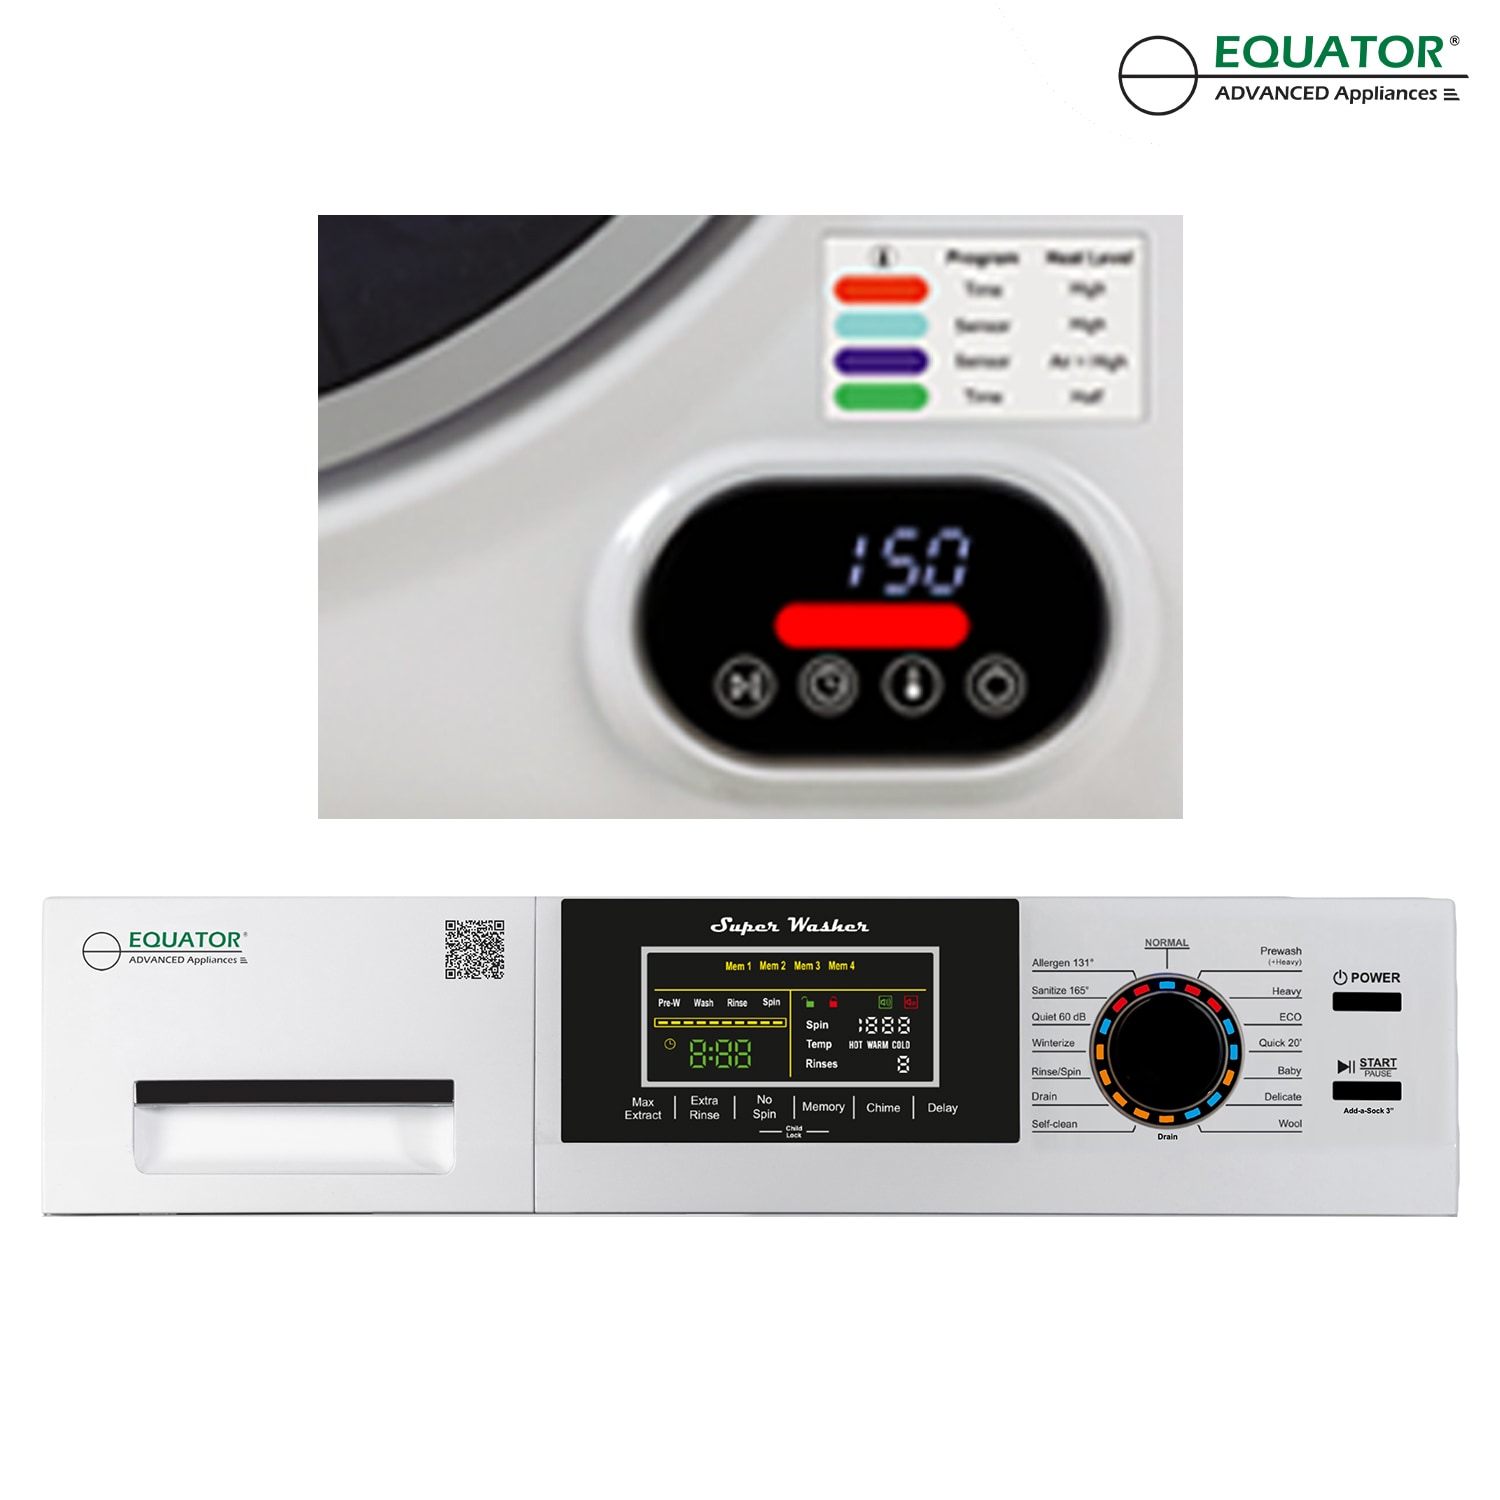 Equator Advanced Appliances, Buy Home Appliances